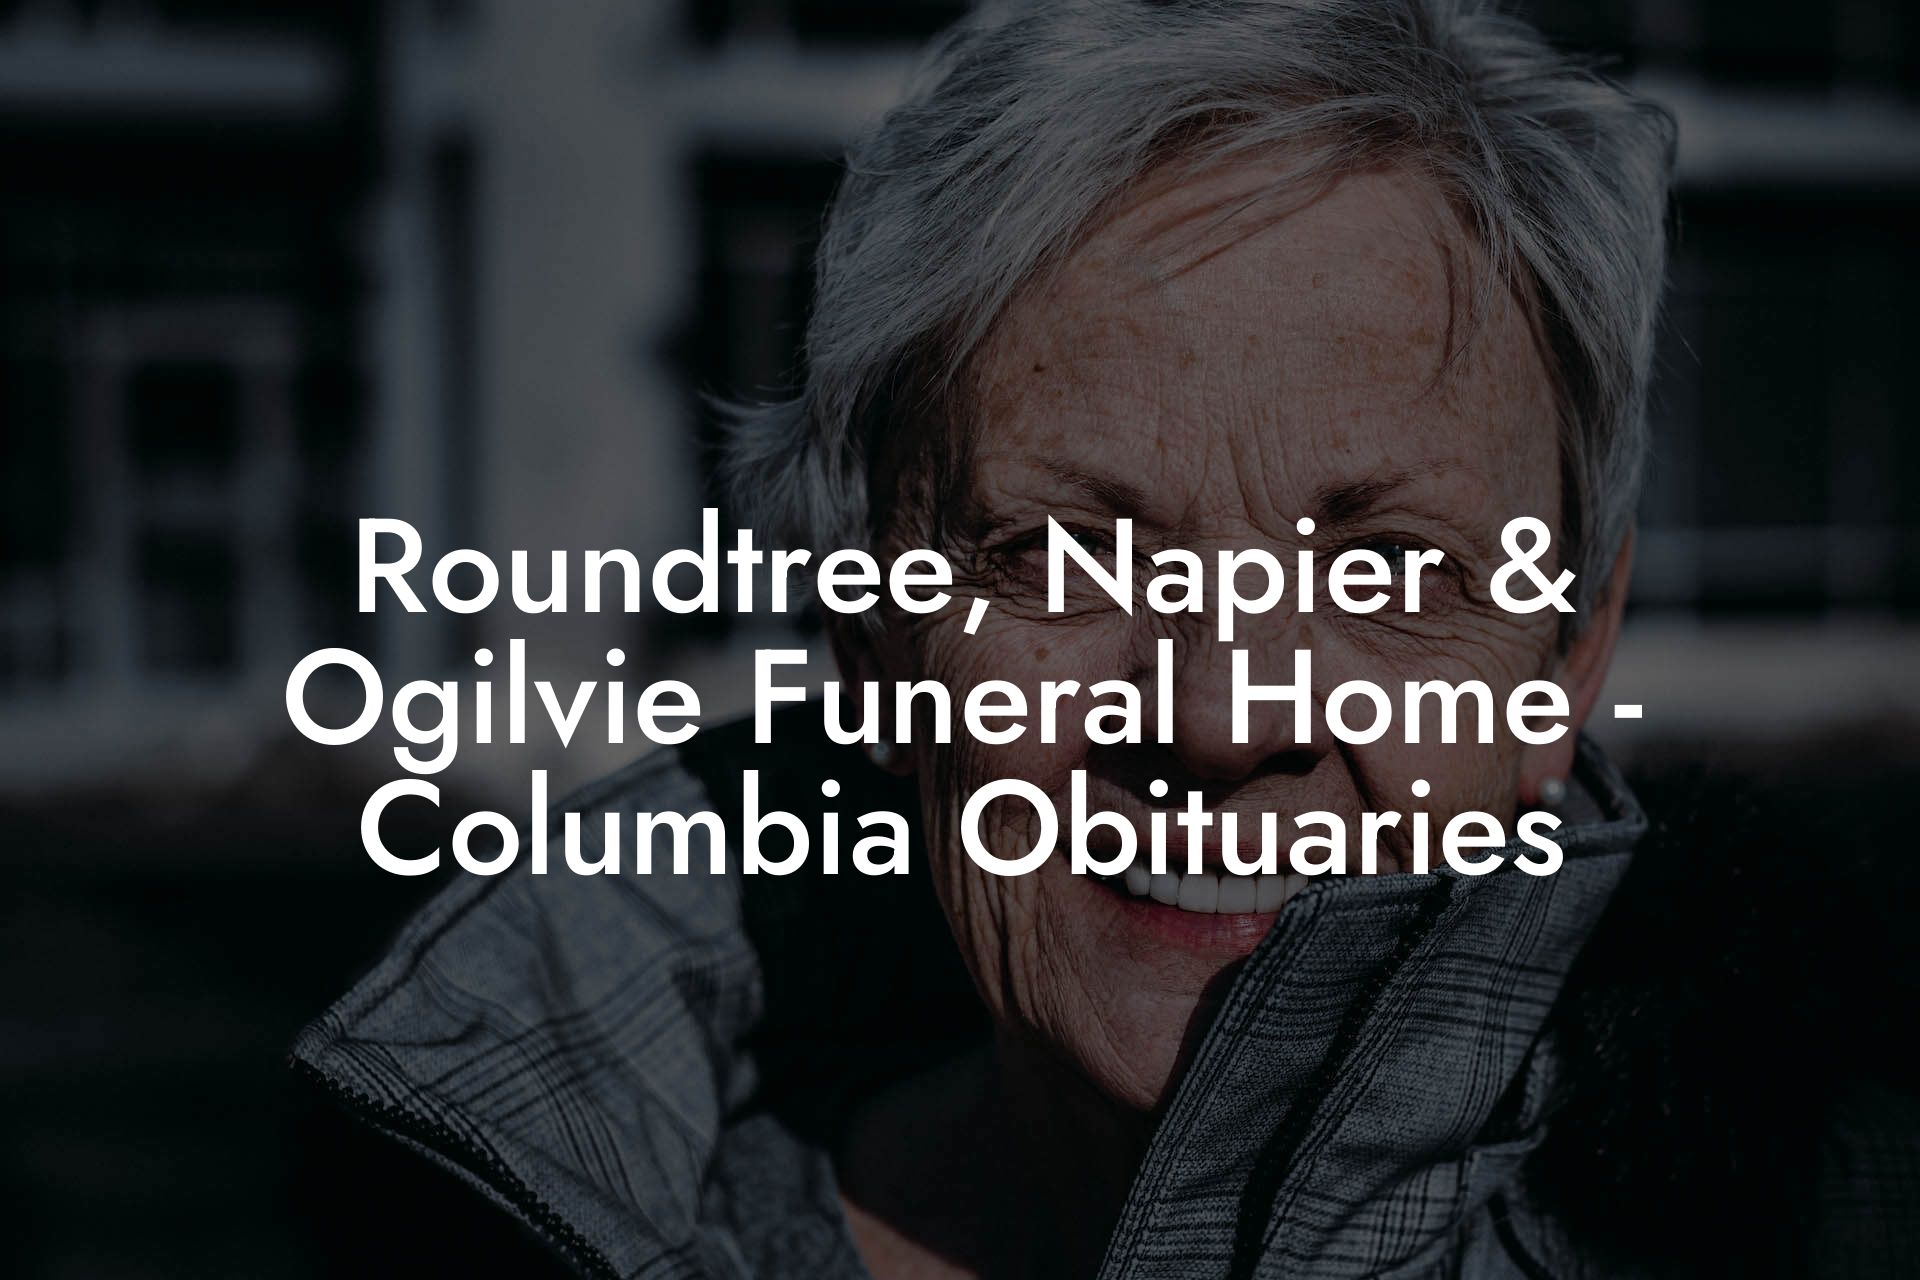 Roundtree, Napier & Ogilvie Funeral Home - Columbia Obituaries